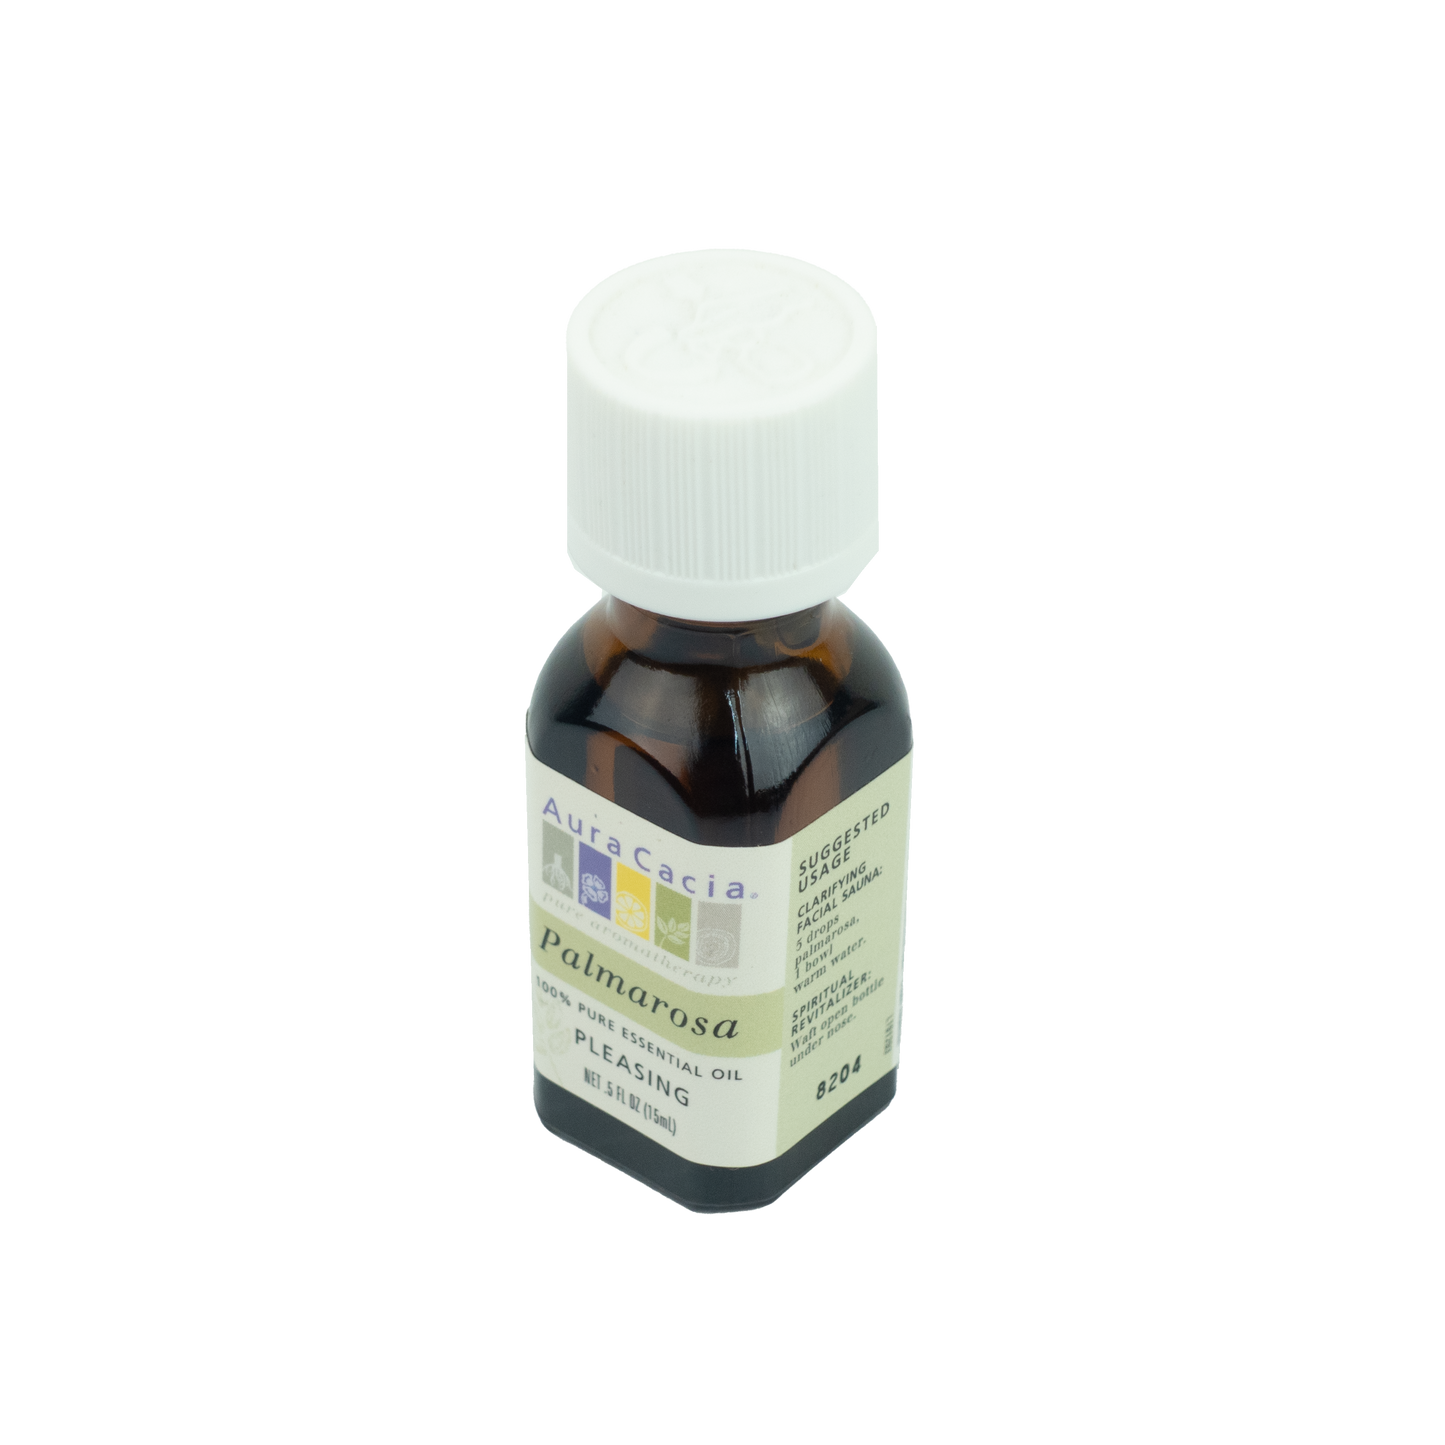 Aura Cacia - Palmarosa Essential Oil (0.5 oz.)